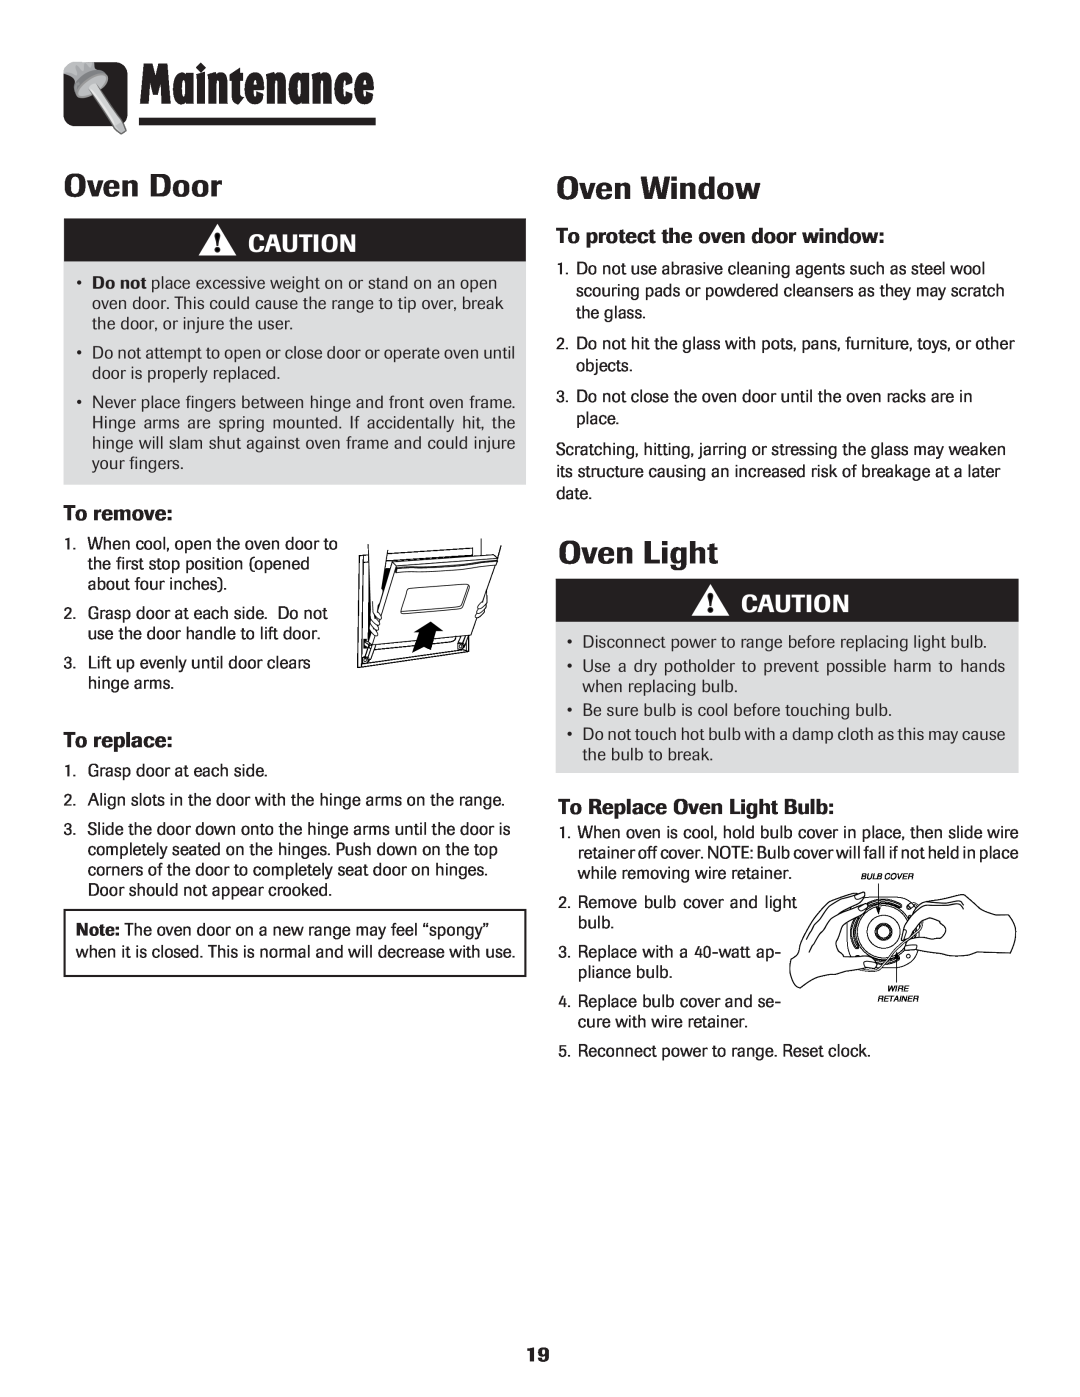 Maytag MER5552BAW warranty Maintenance, Oven Door, Oven Window, To protect the oven door window, To Replace Oven Light Bulb 